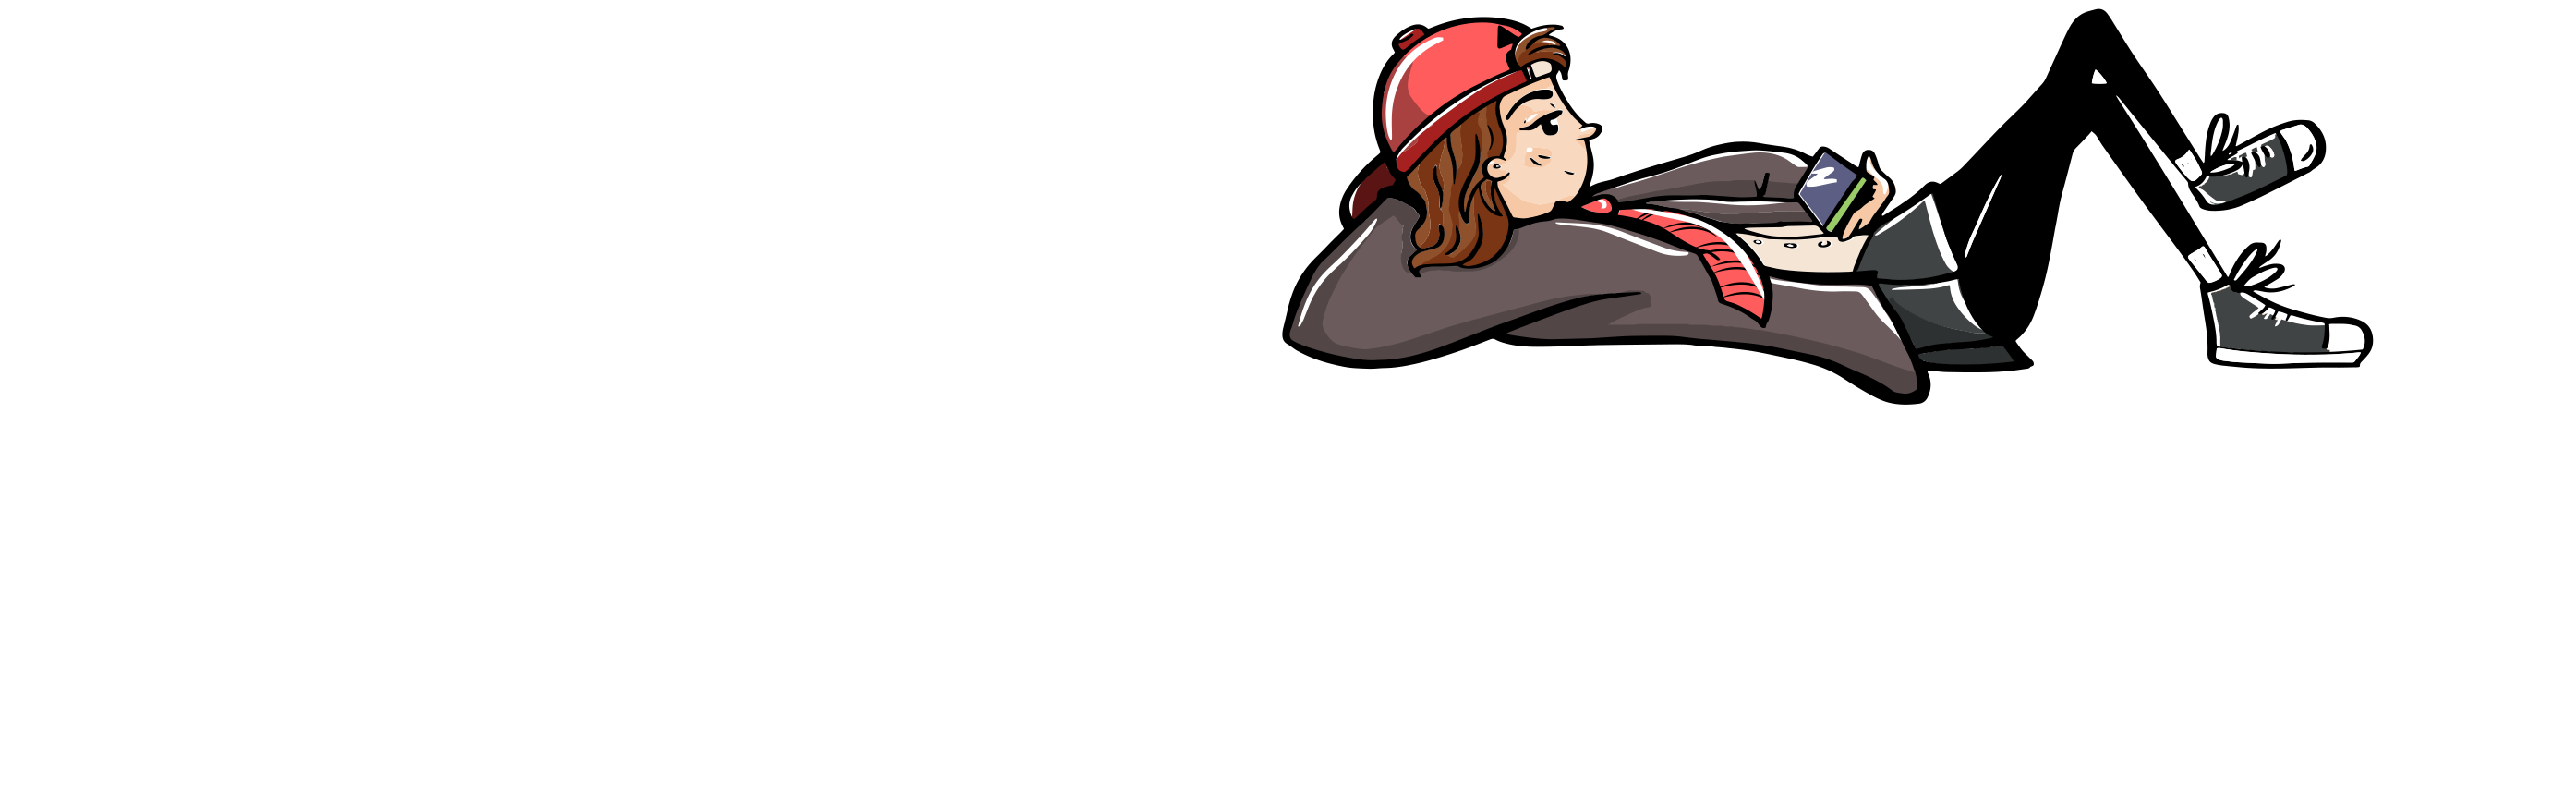 Logo StegaAcademy